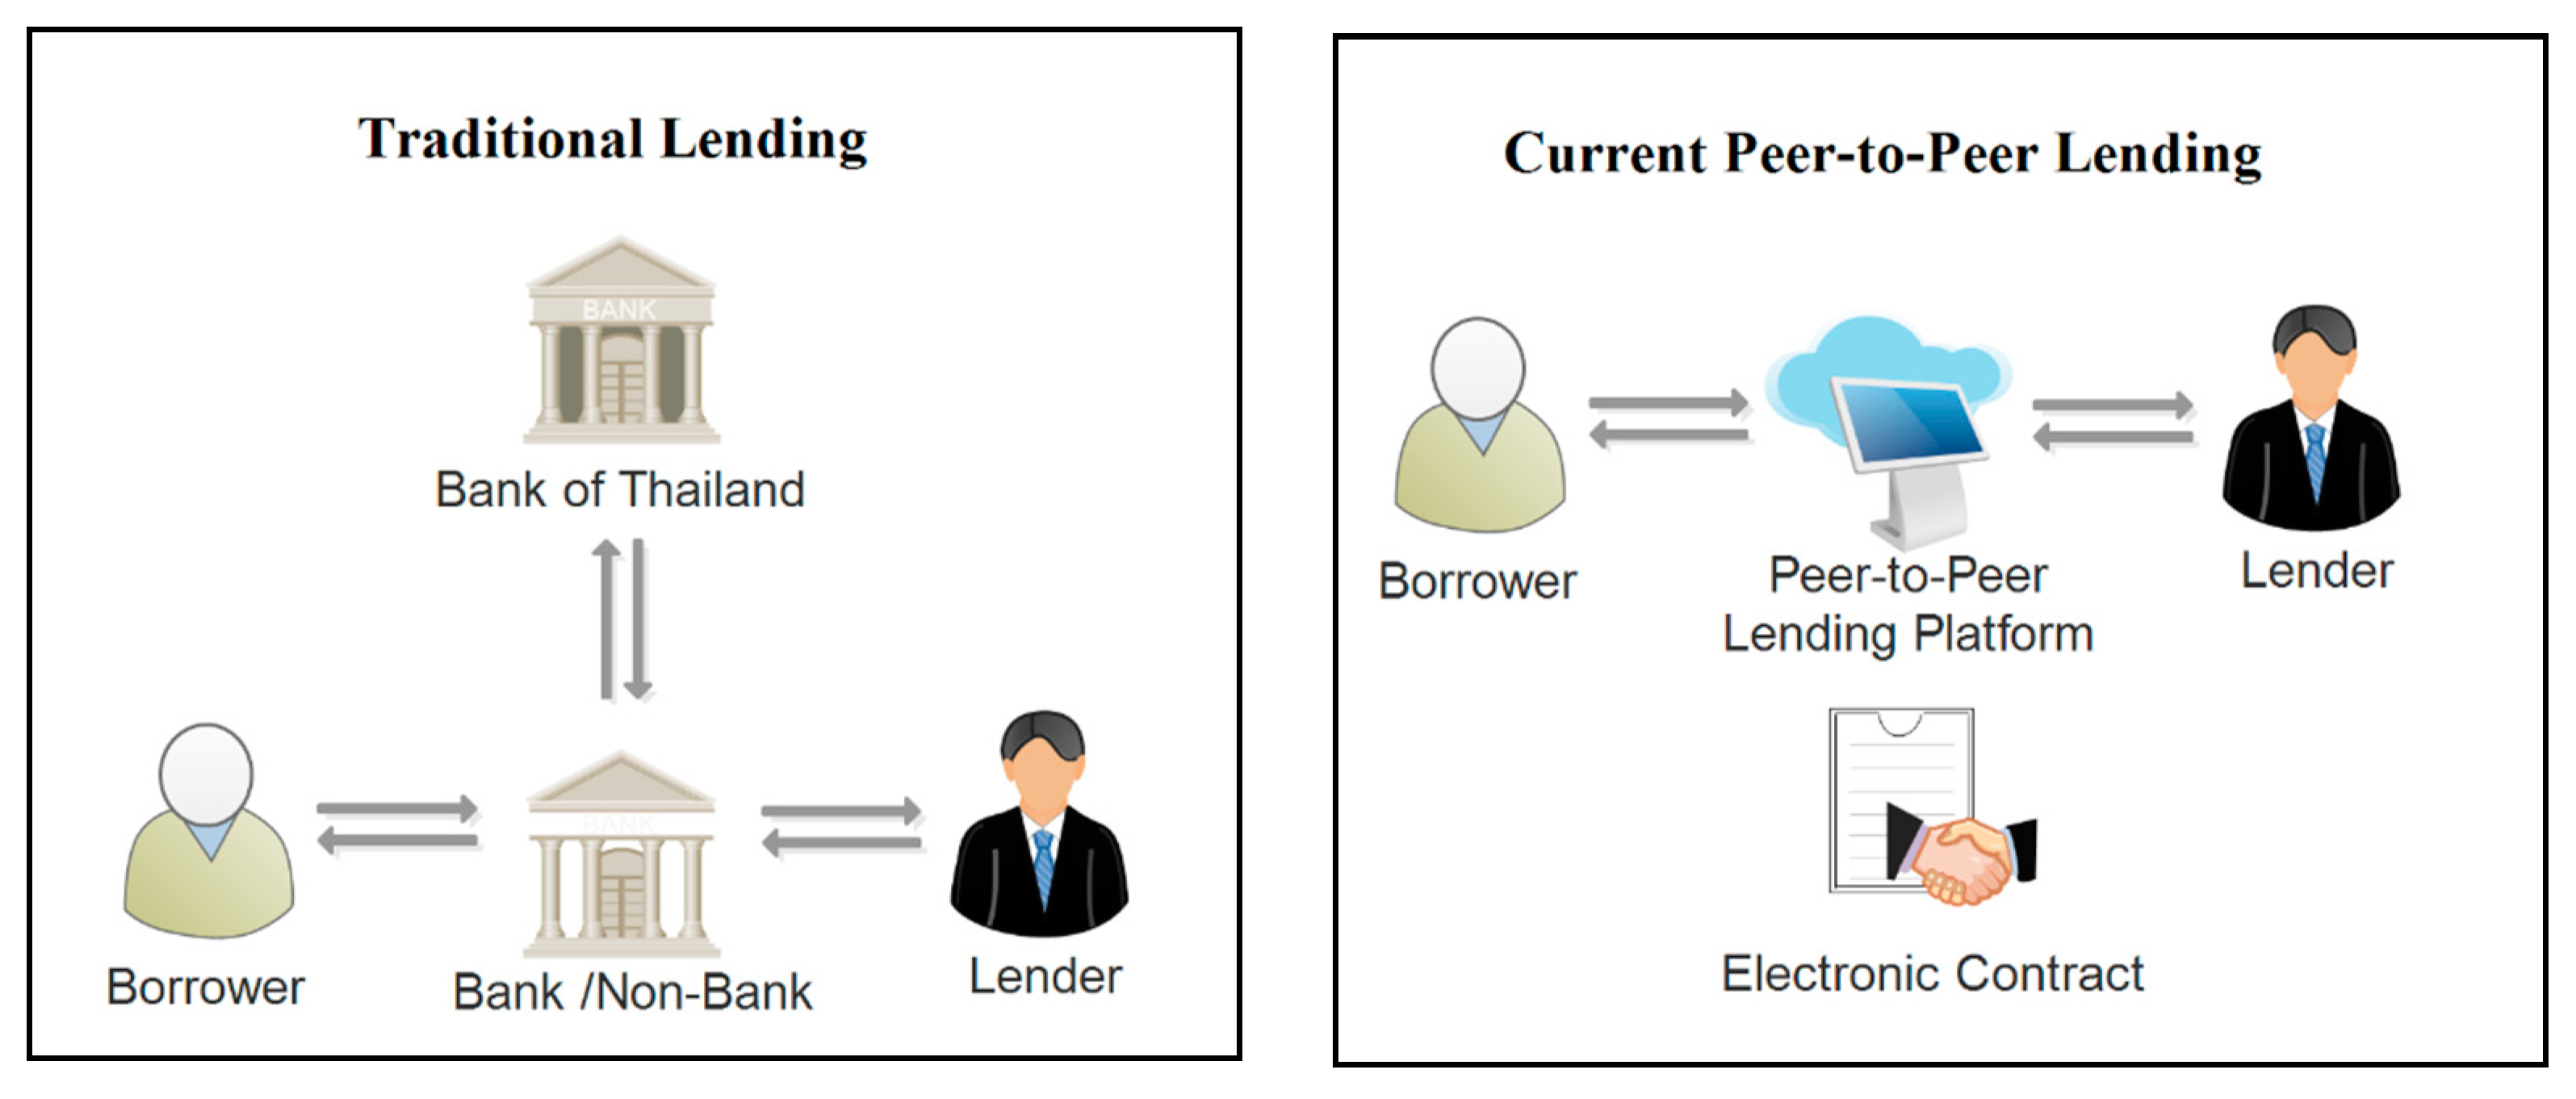 PP lending platforms